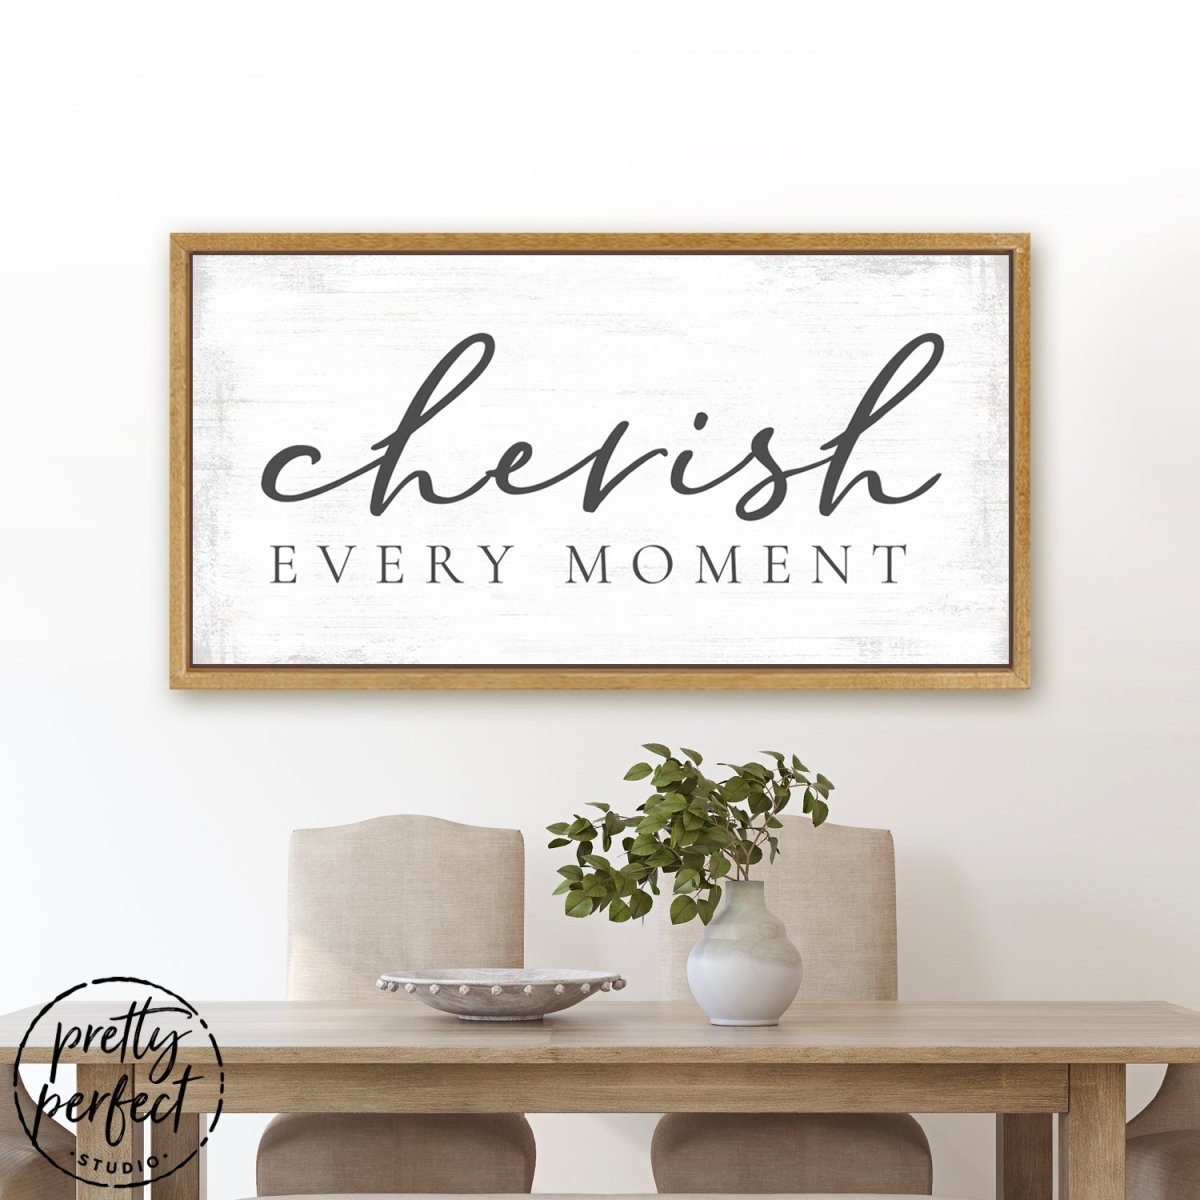 Cherish Every Moment Quote Wall Art Above The Table - Pretty Perfect Studio